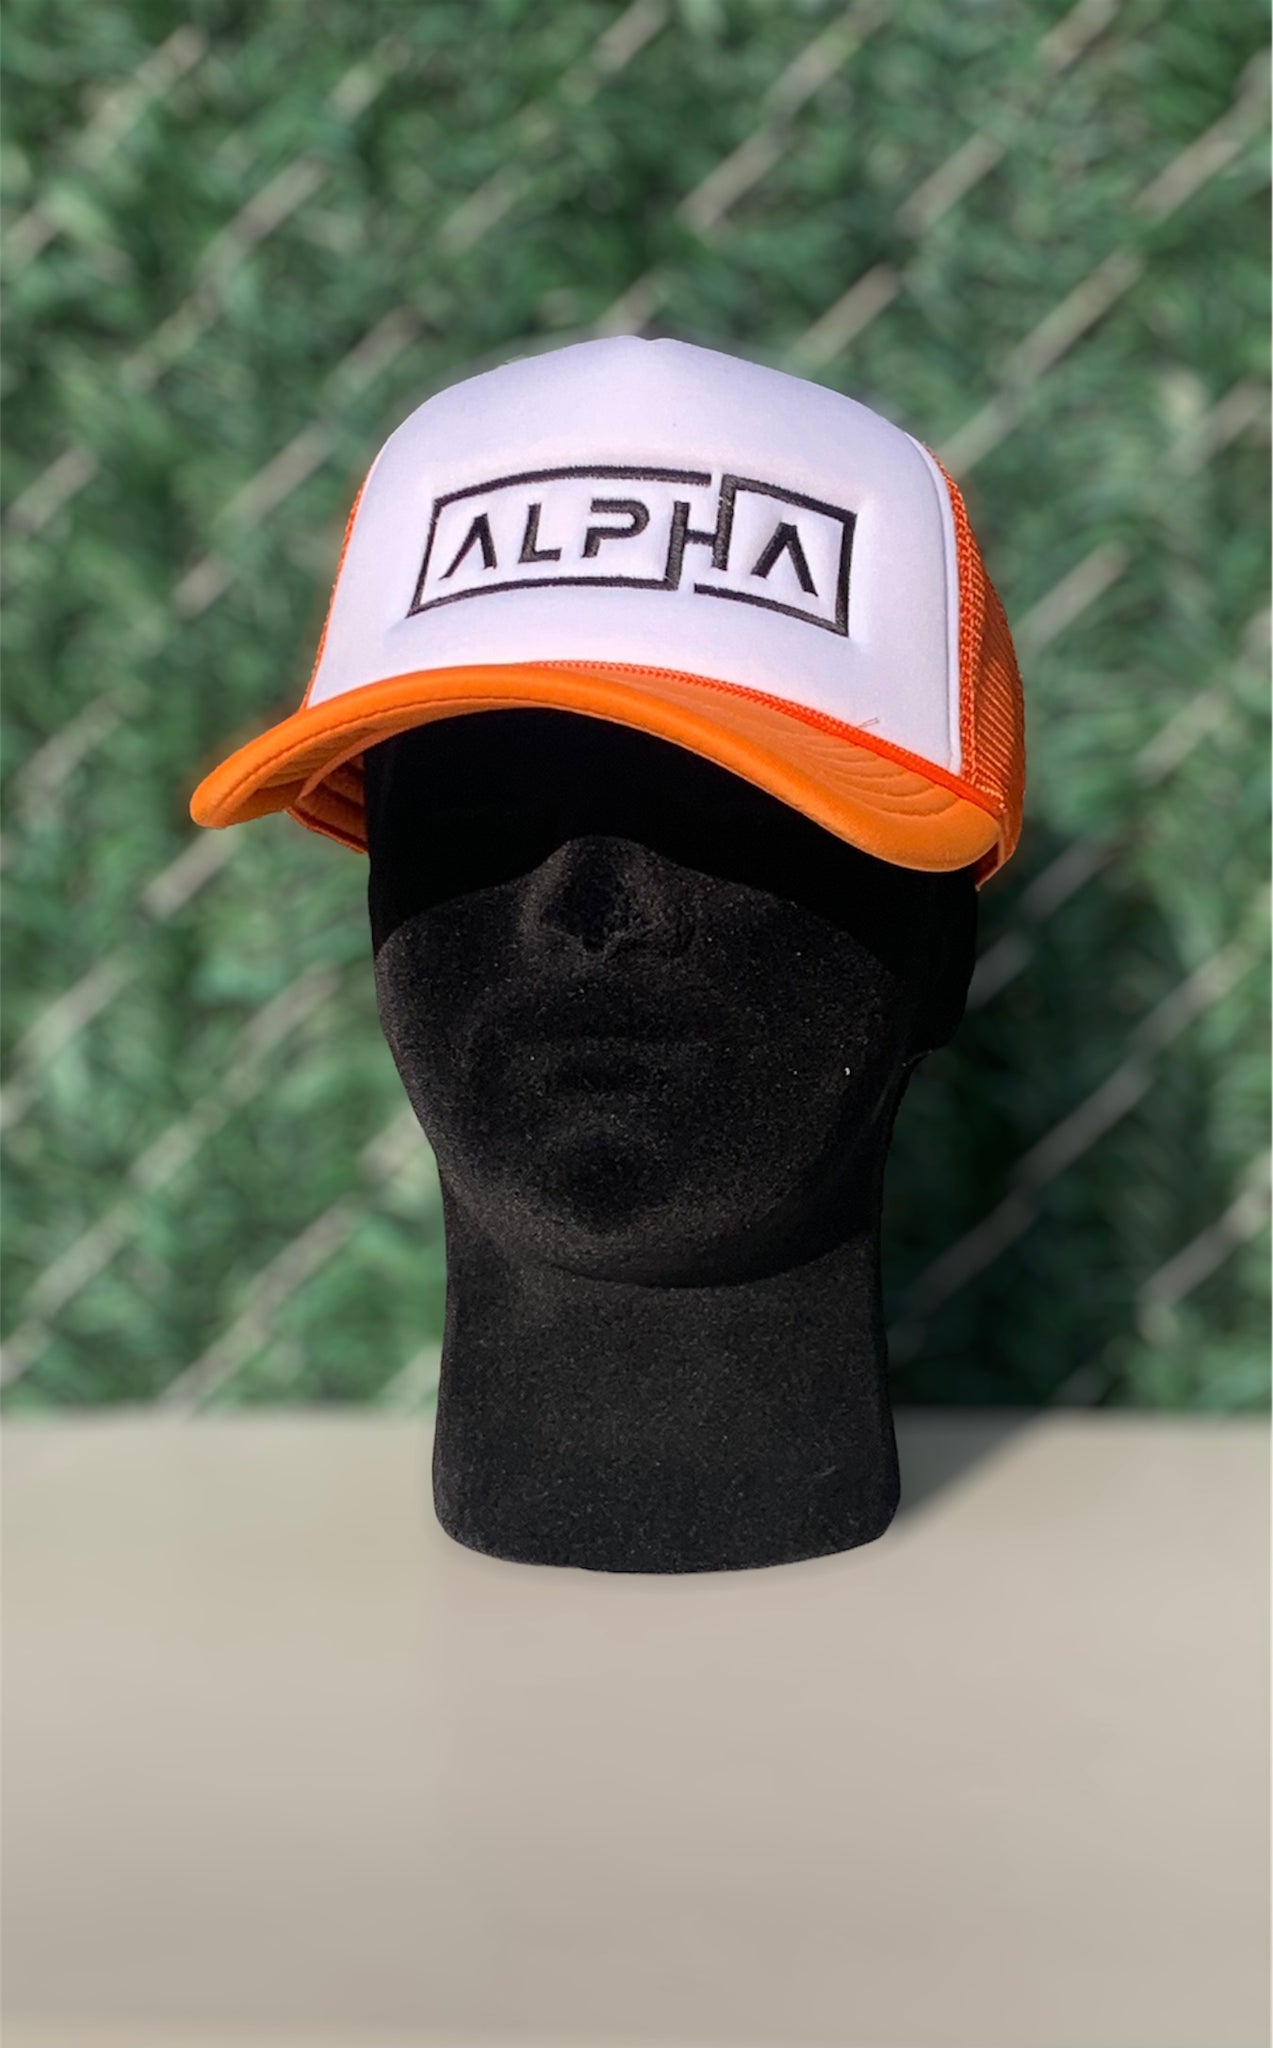 Alpha Trucker – Alphamenscare hat